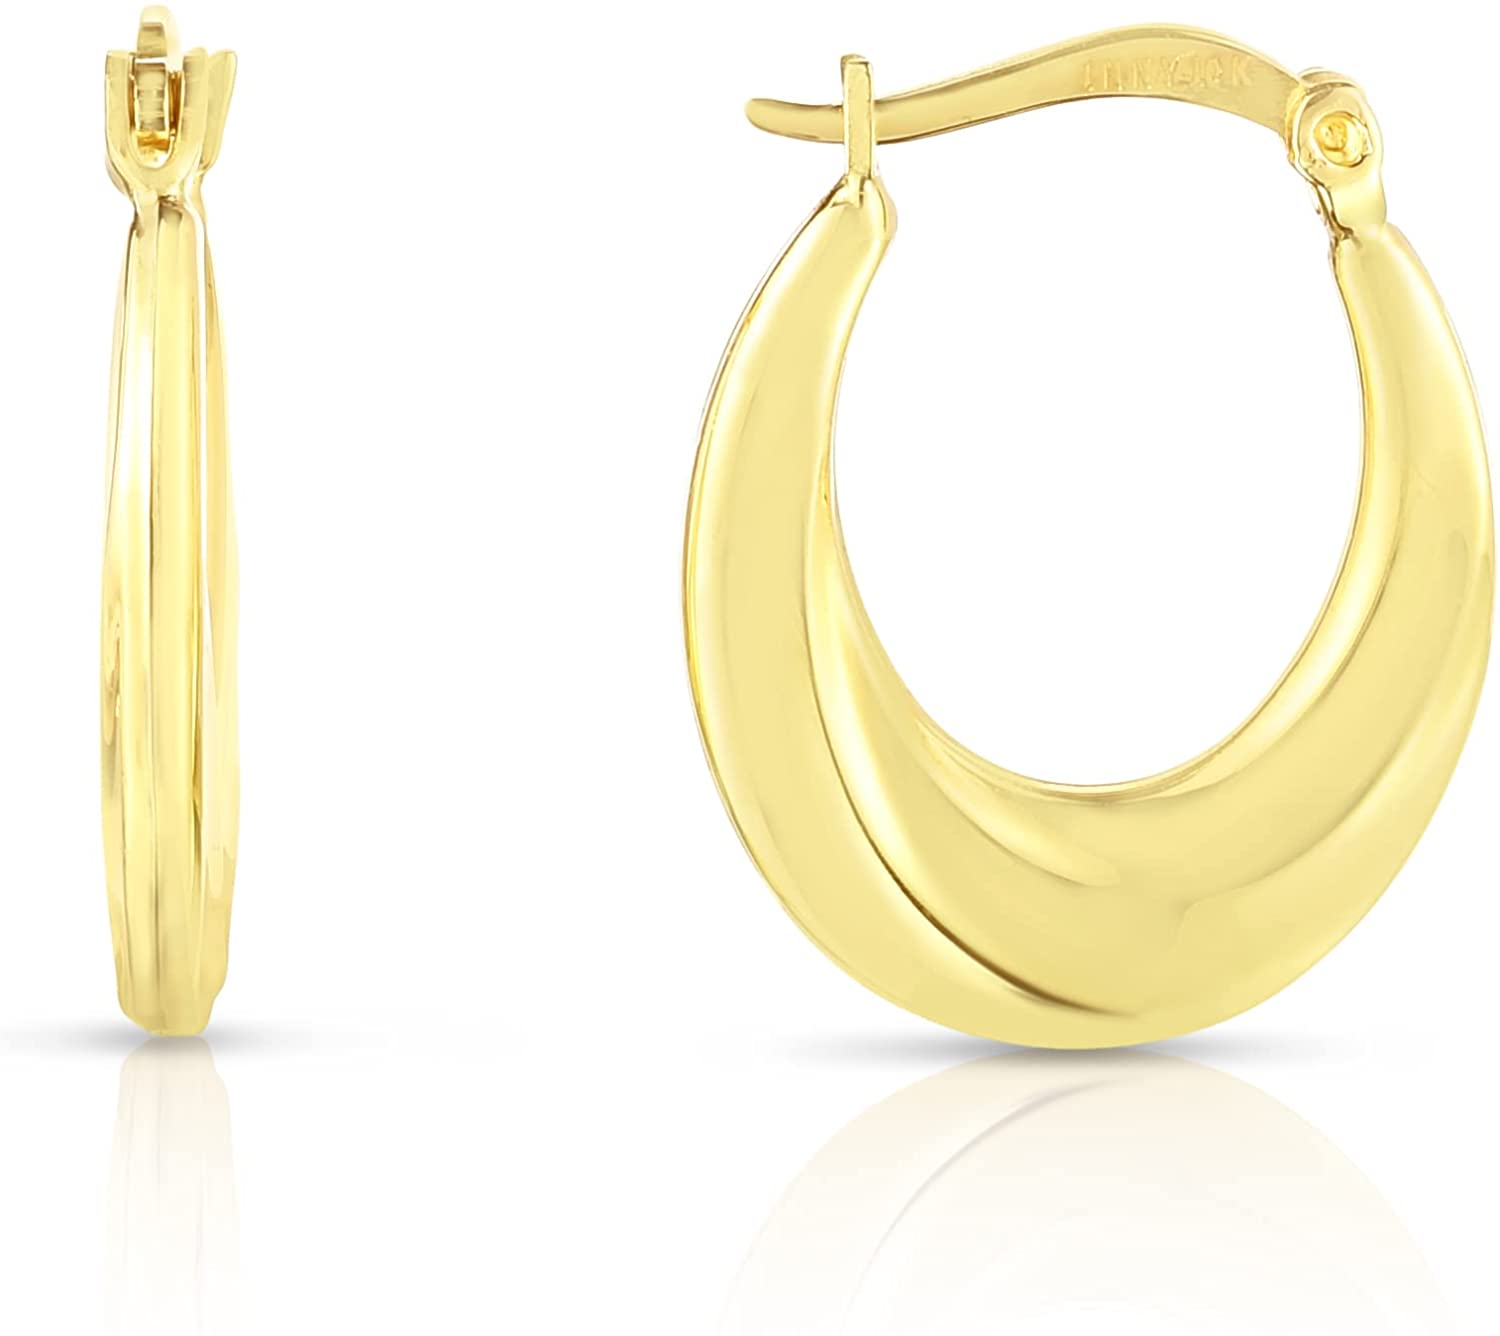 10k Yellow Gold High Polish and Twisted Wave Swirl Design Hoop Earrings